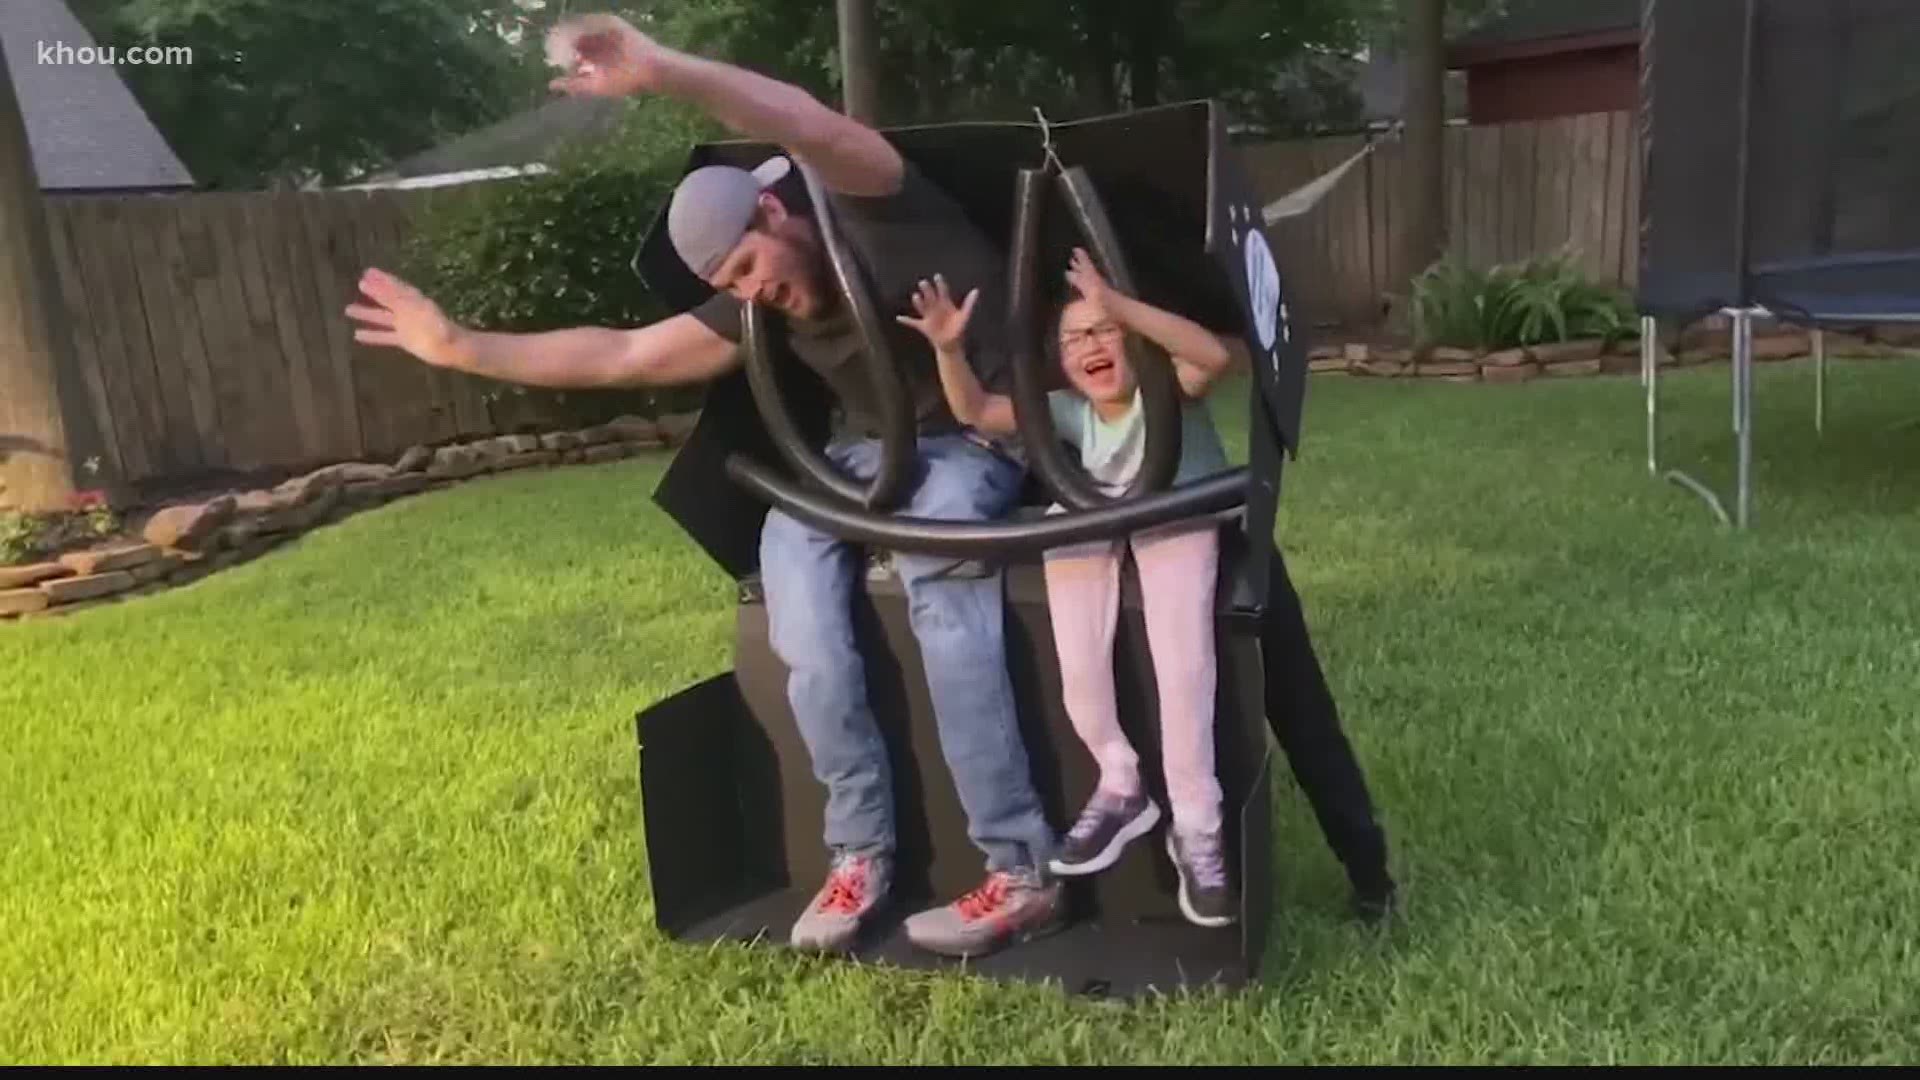 Houston Family Builds Cardboard Roller Coaster In Their Backyard Khou Com